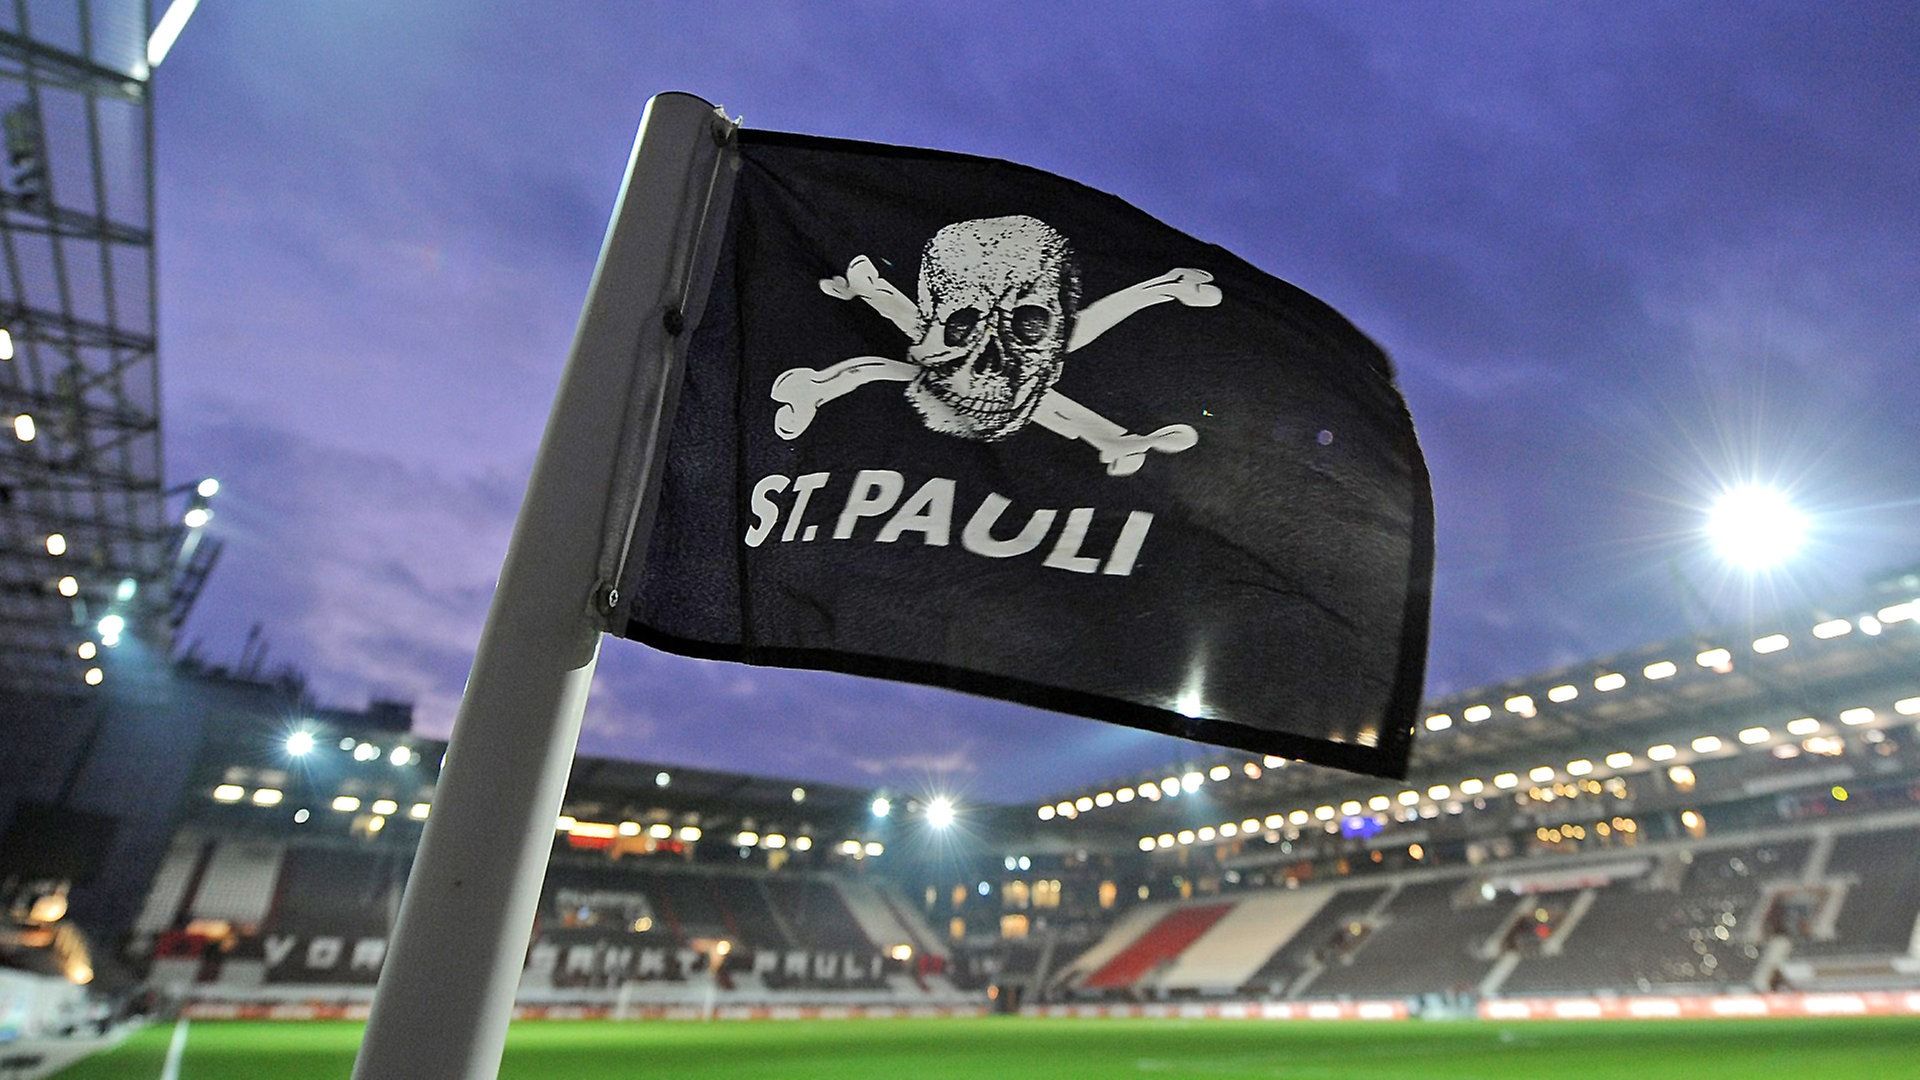  FC St Pauli Hintergrundbild 1920x1080. FC St. Pauli: Verein Und Fans Fordern DFL Reformen. NDR.deßball